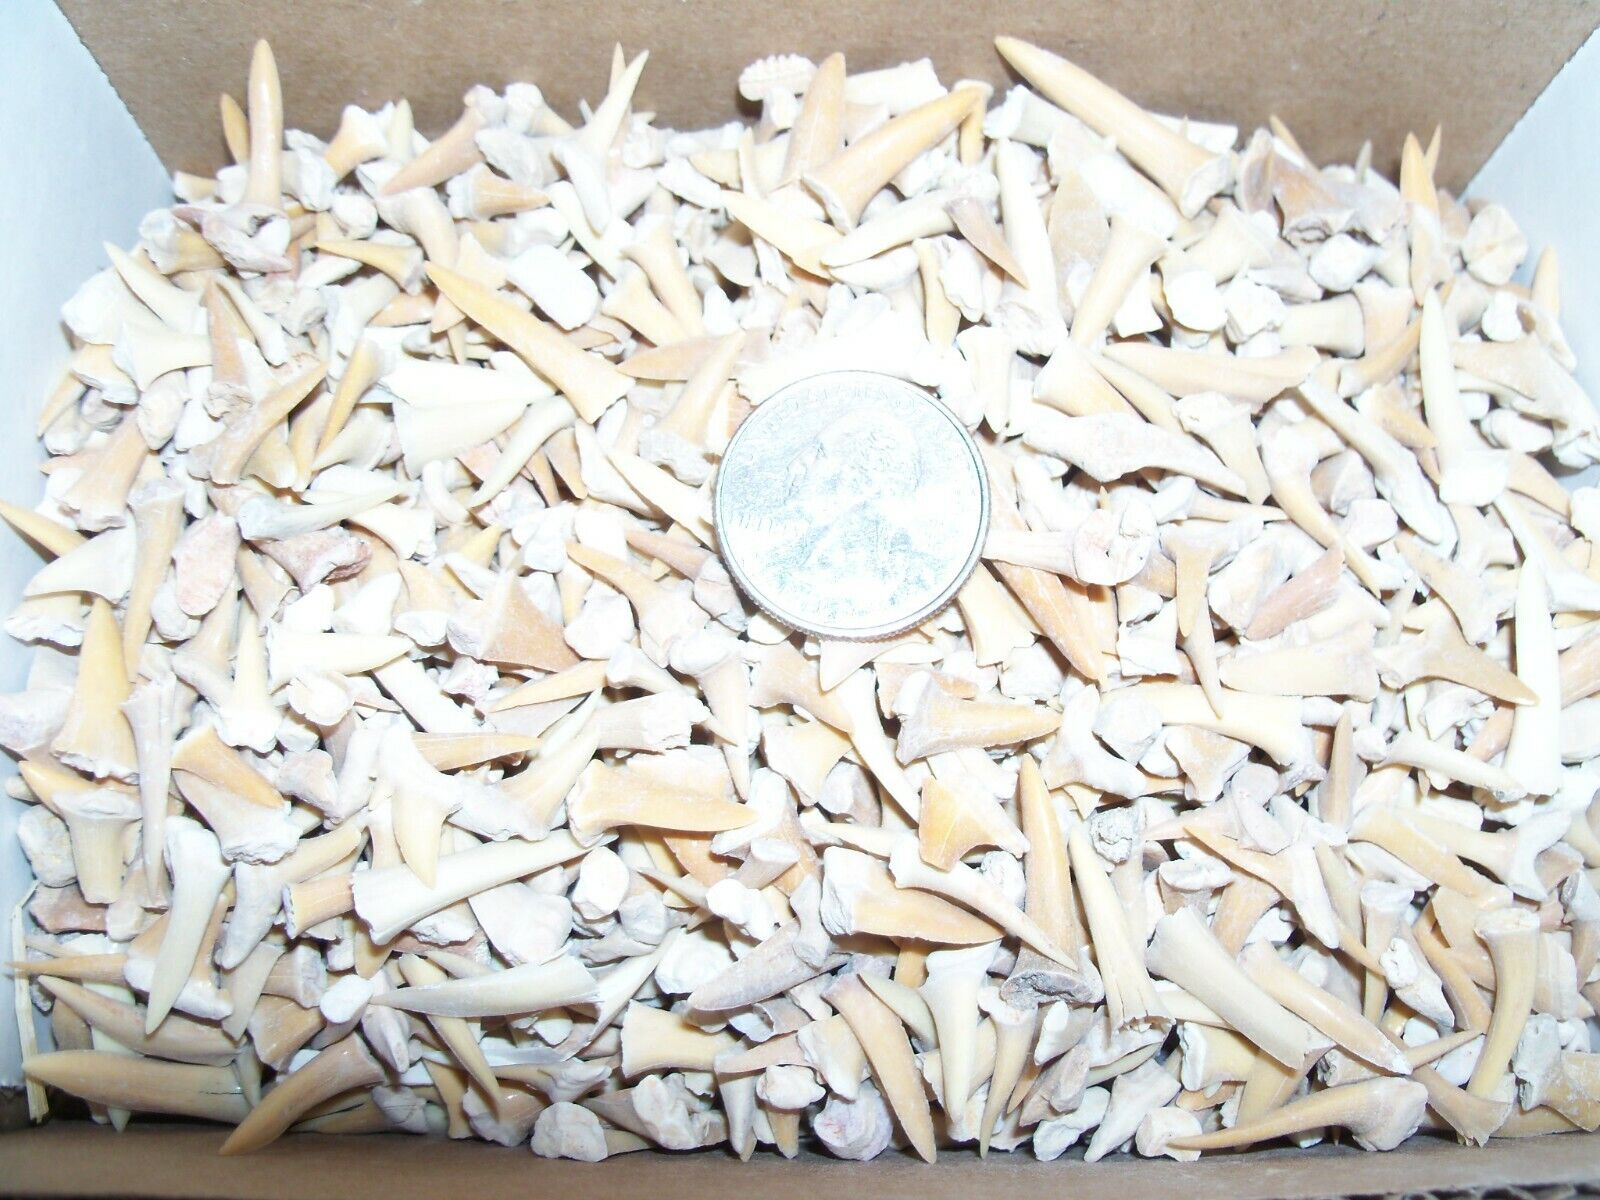 100 fossil Moroccan shark teeth per lot.